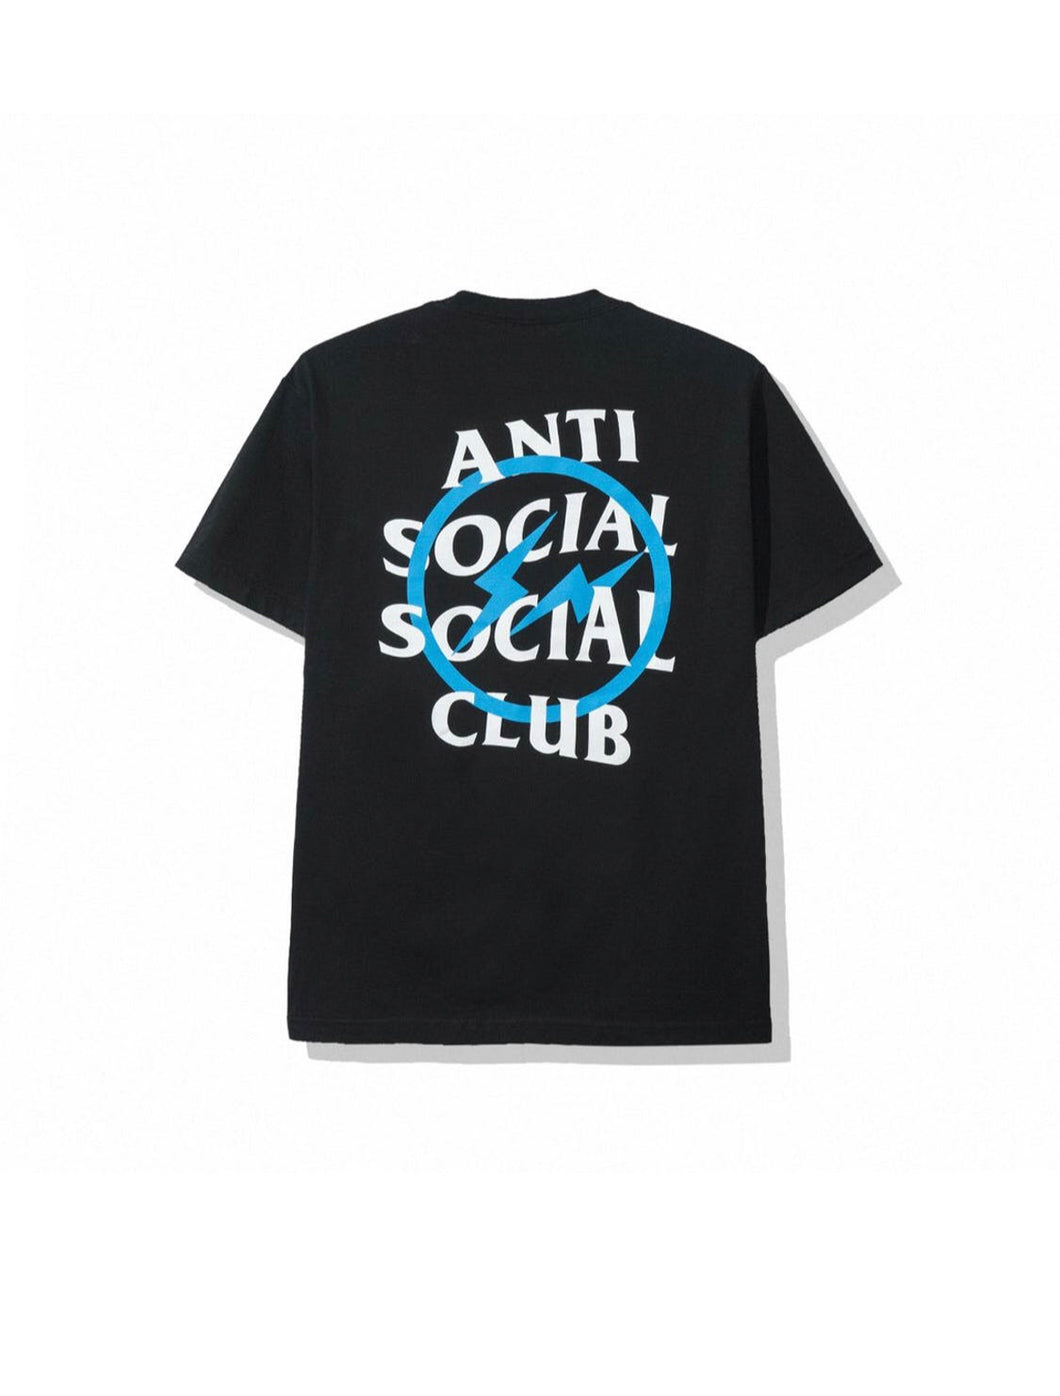 ANTI SOCIAL SOCIAL CLUB x FRAGMENT BLUE BOLT (black)